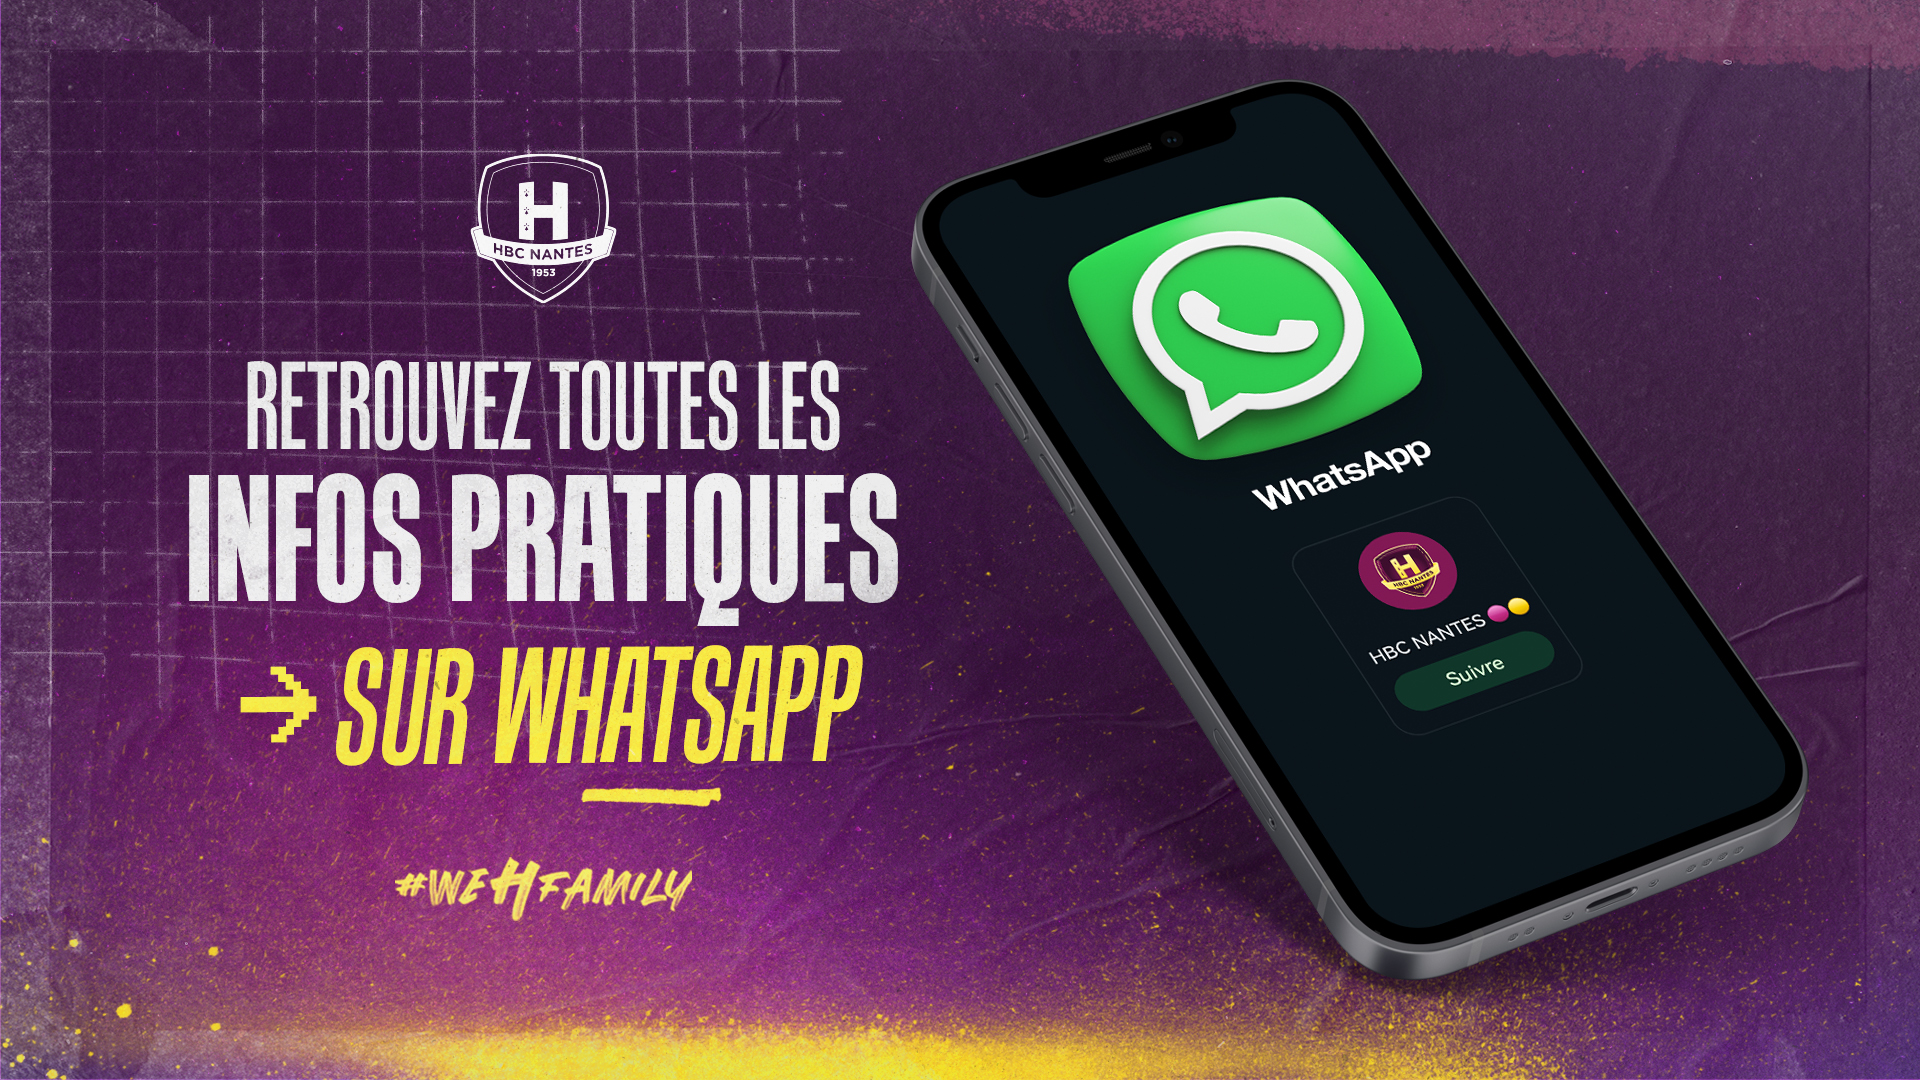 Le HBC Nantes lance sa chaîne WhatsApp !